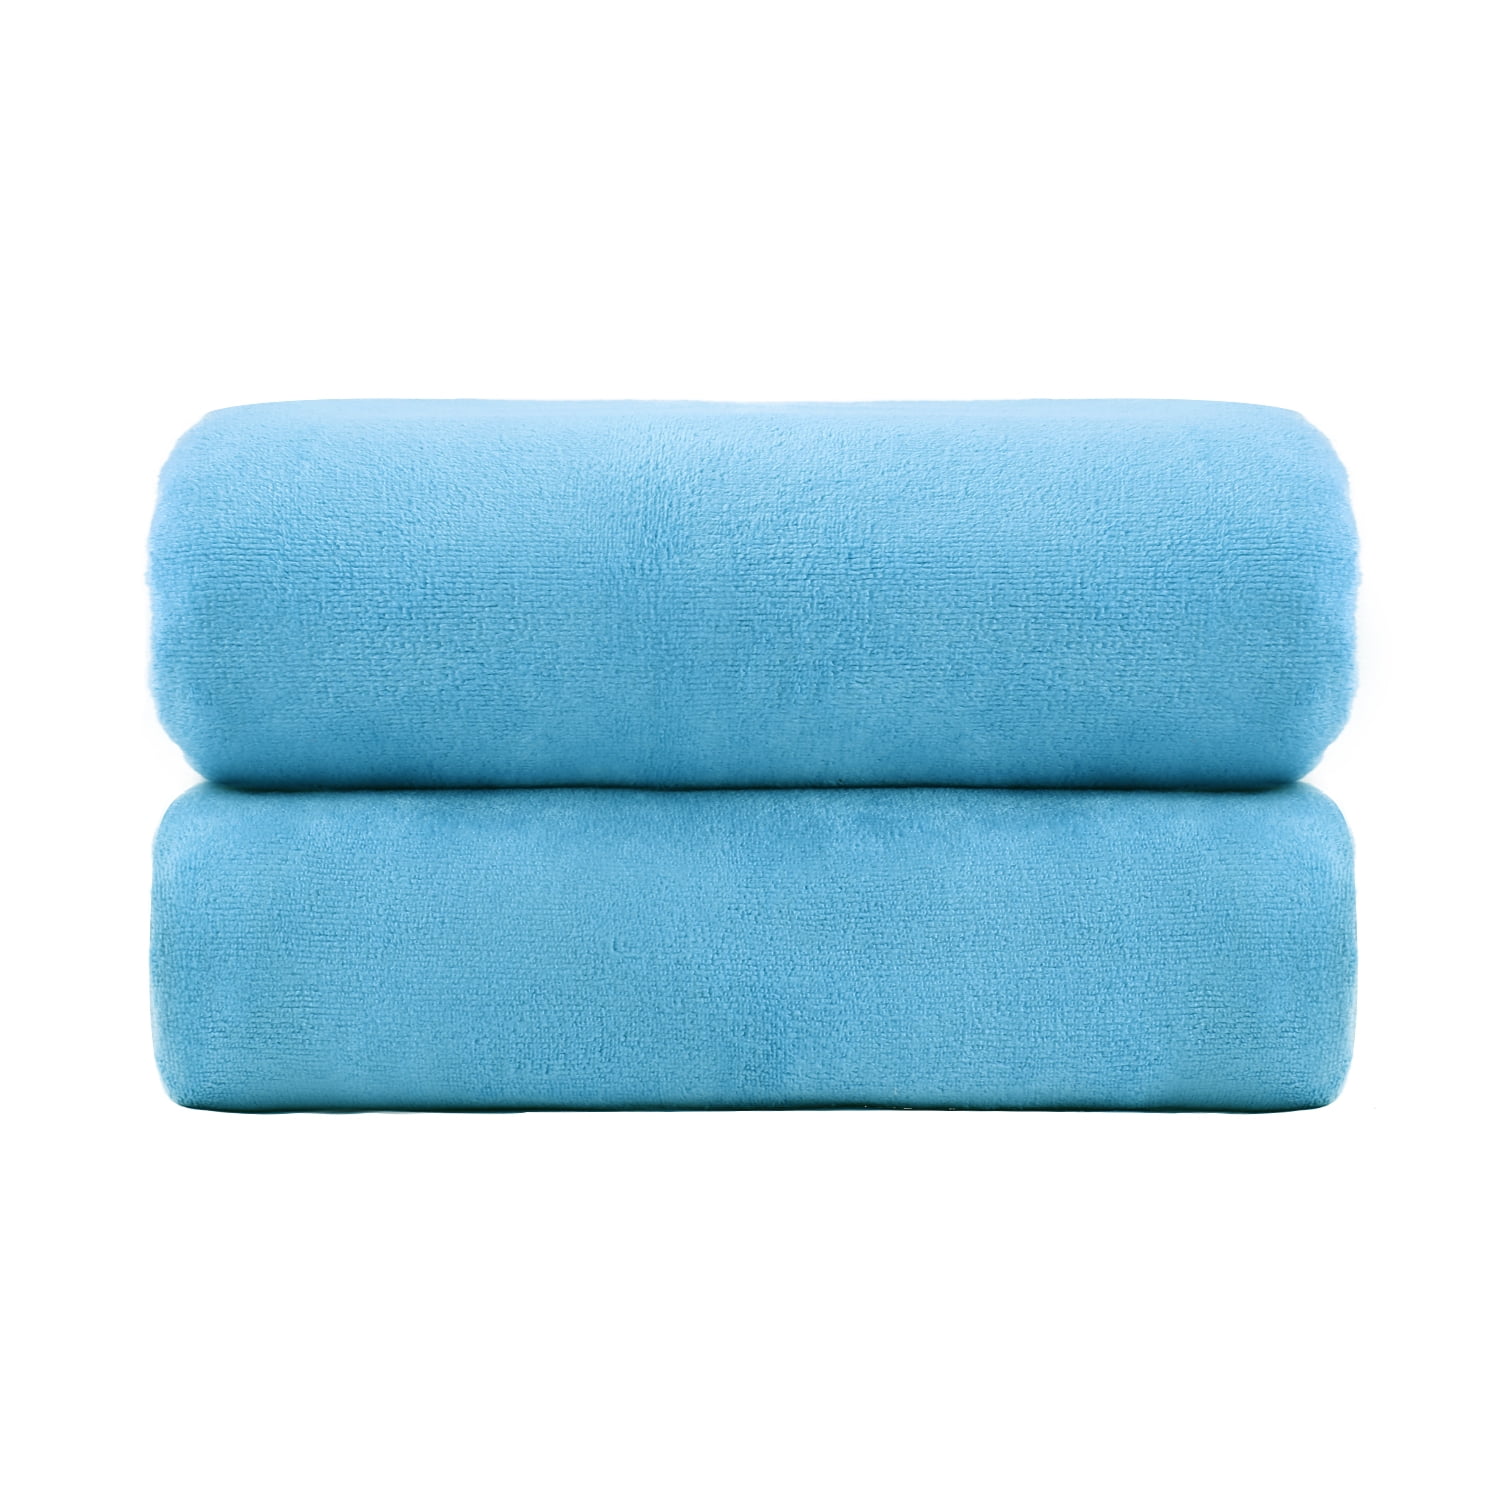 Jml Bath Towels (2 Pack, 30 inchx60 inch), White Fleece Bath Towel, Luxury Hotel & Spa Towel Sets - Super Soft and Absorbent, Lint Free, Fade